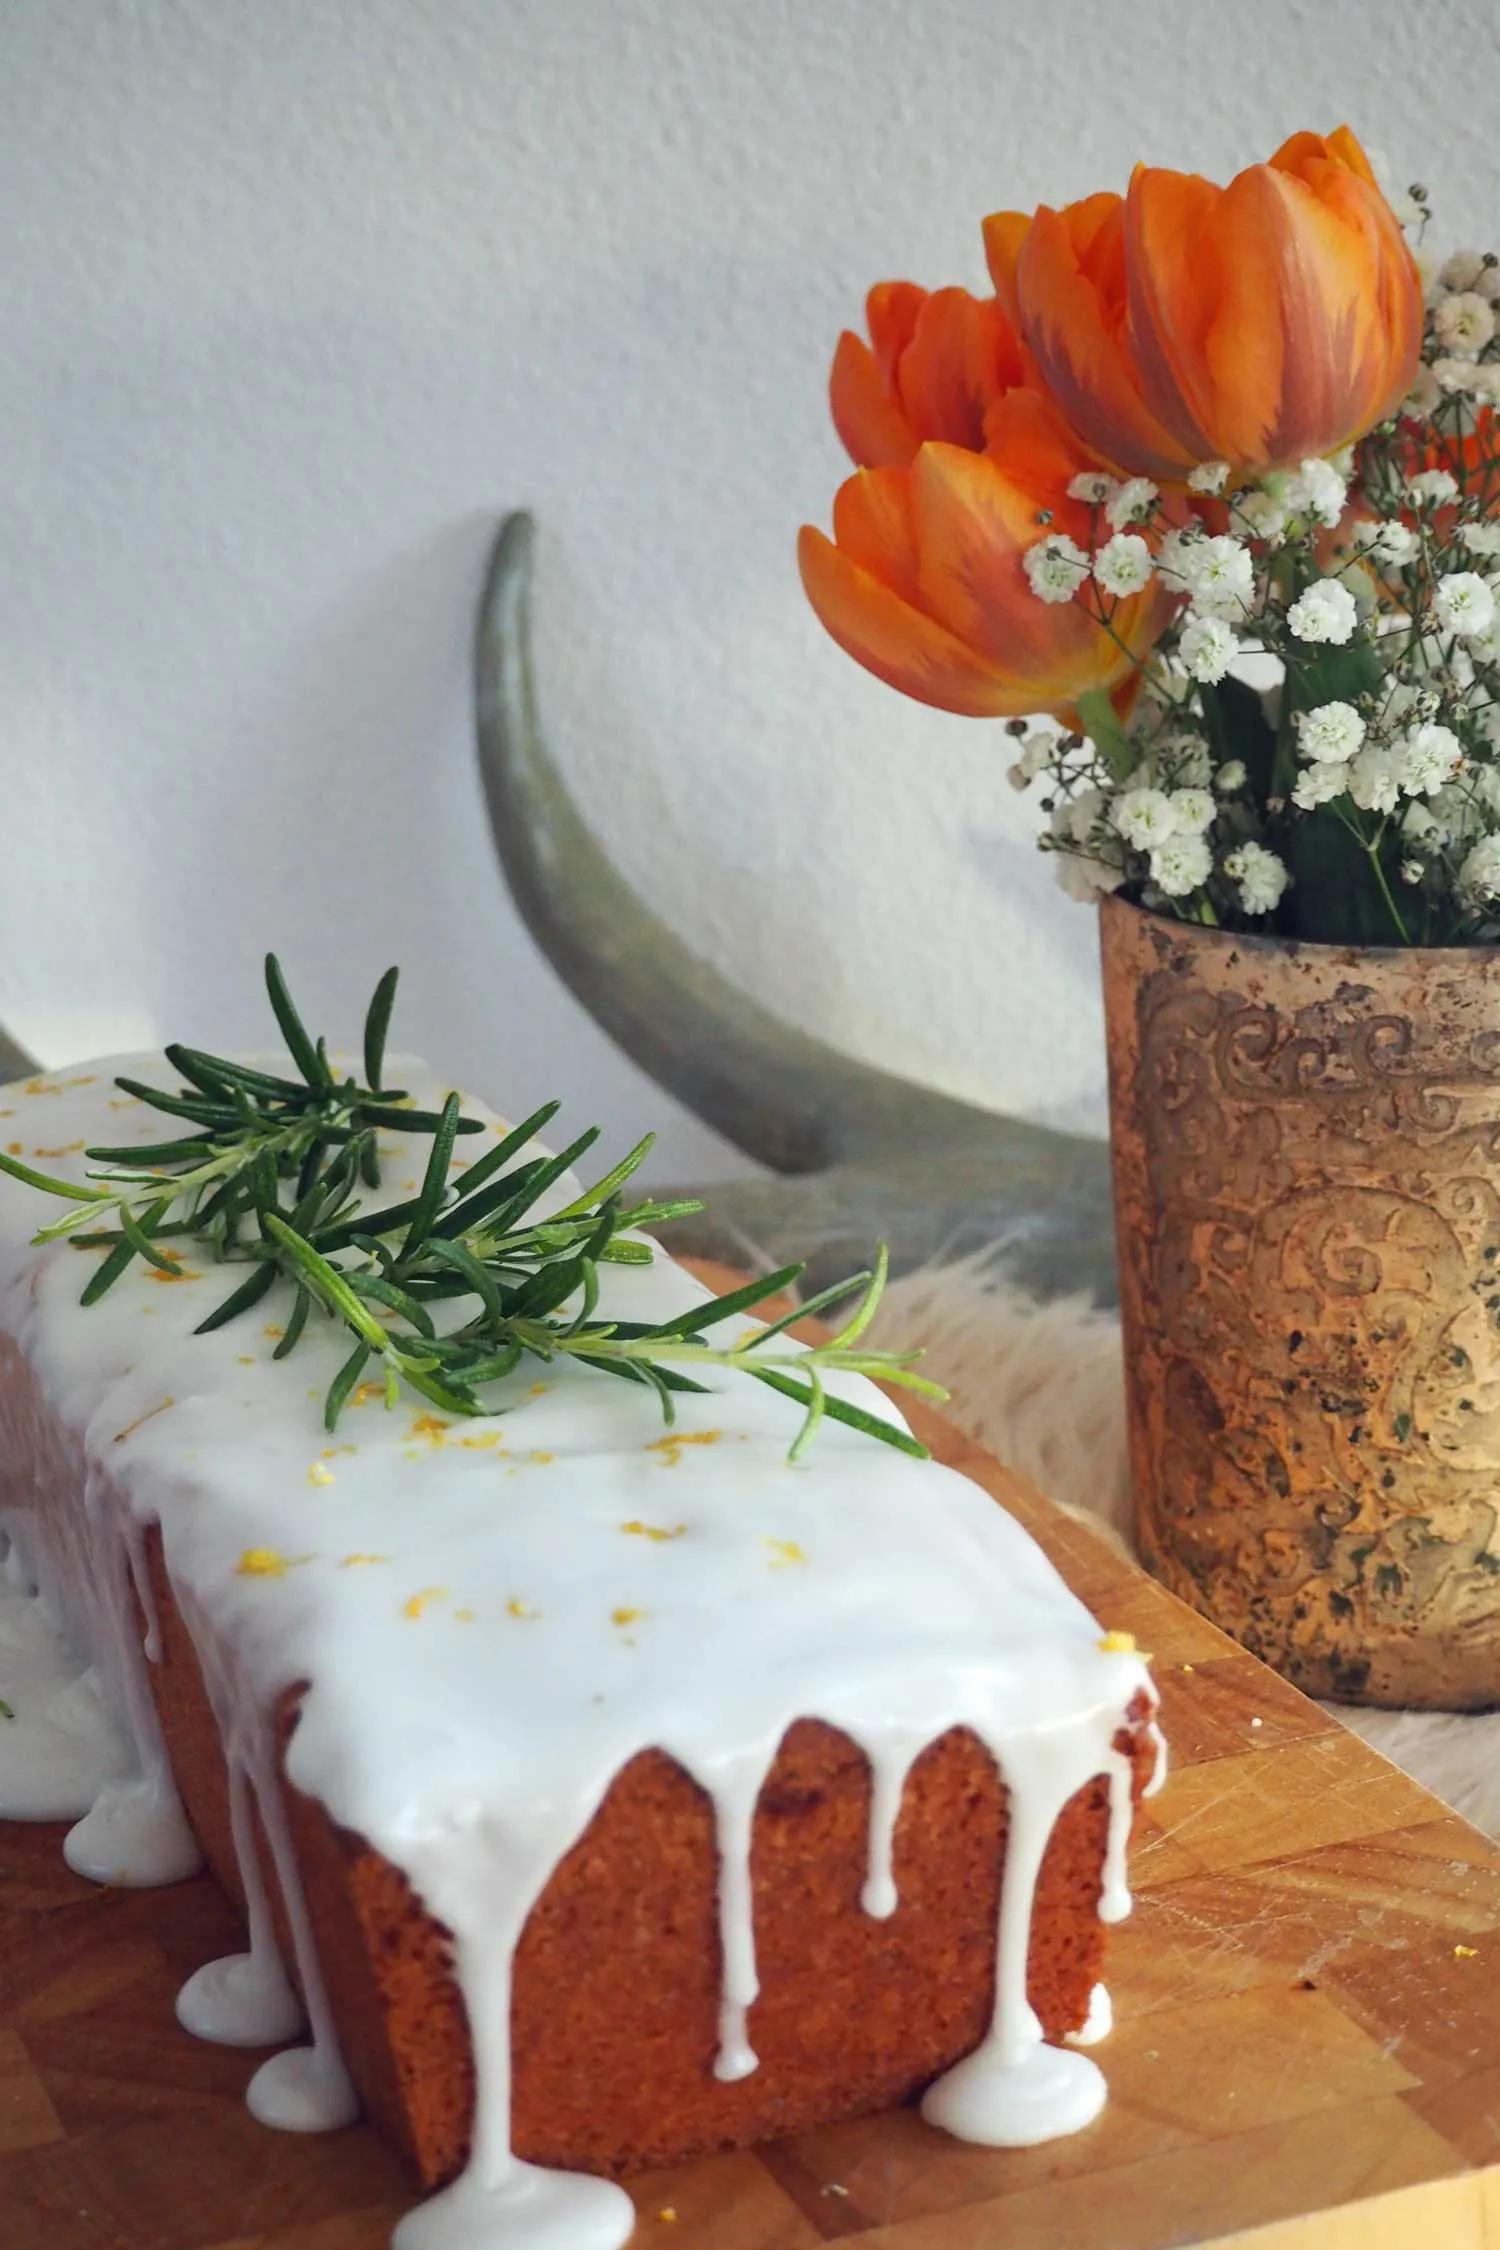 Madeira Cake backen – zitroniger Kuchen zum Afternoon Tea